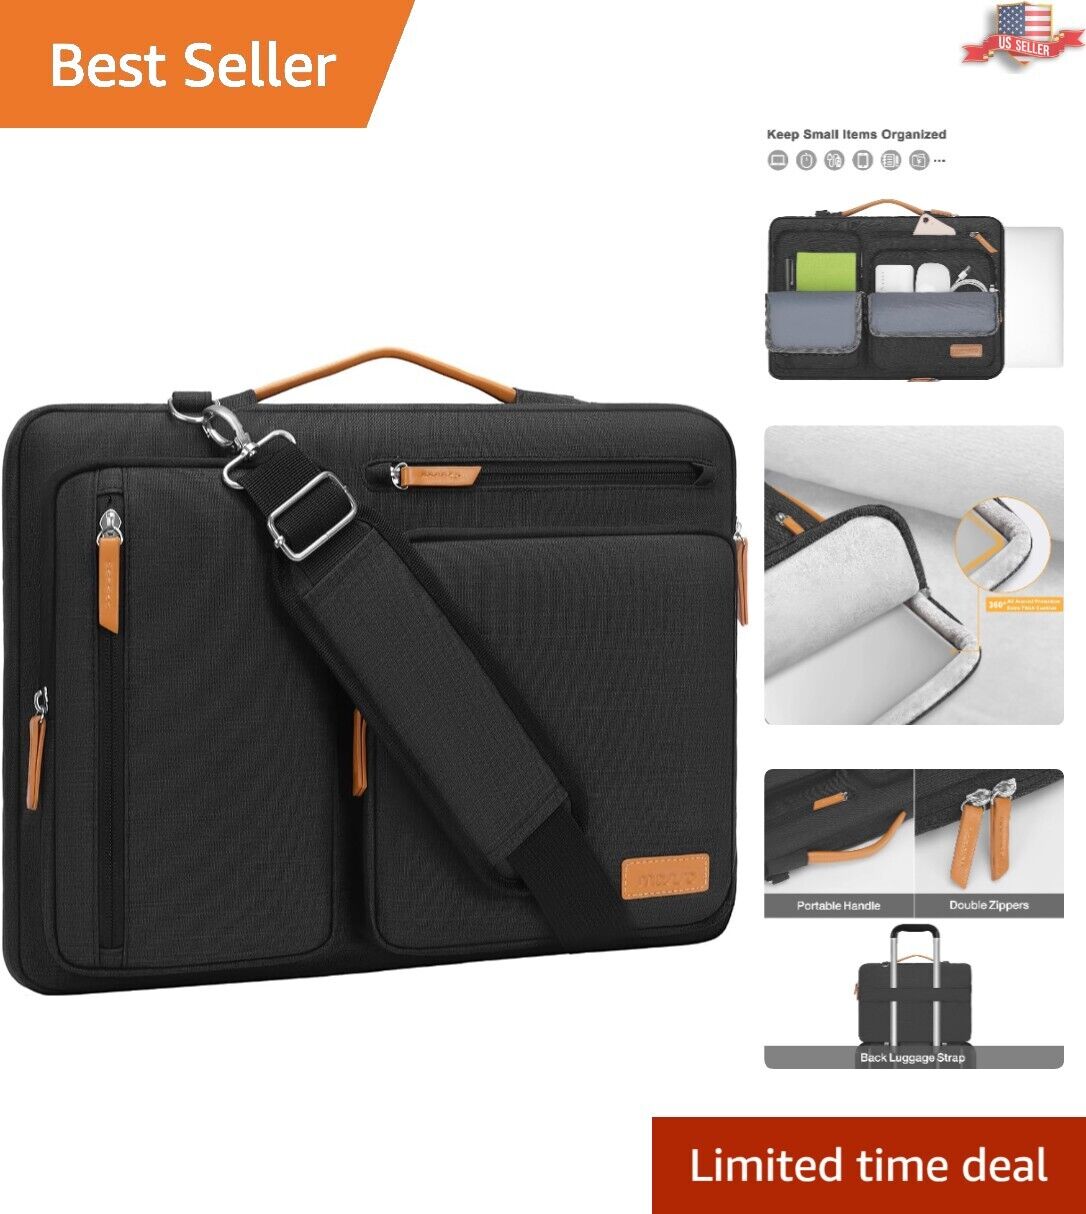 360-Degree Modern Sleek Laptop Bag 14 inch - MacBook/Dell/HP Compatible